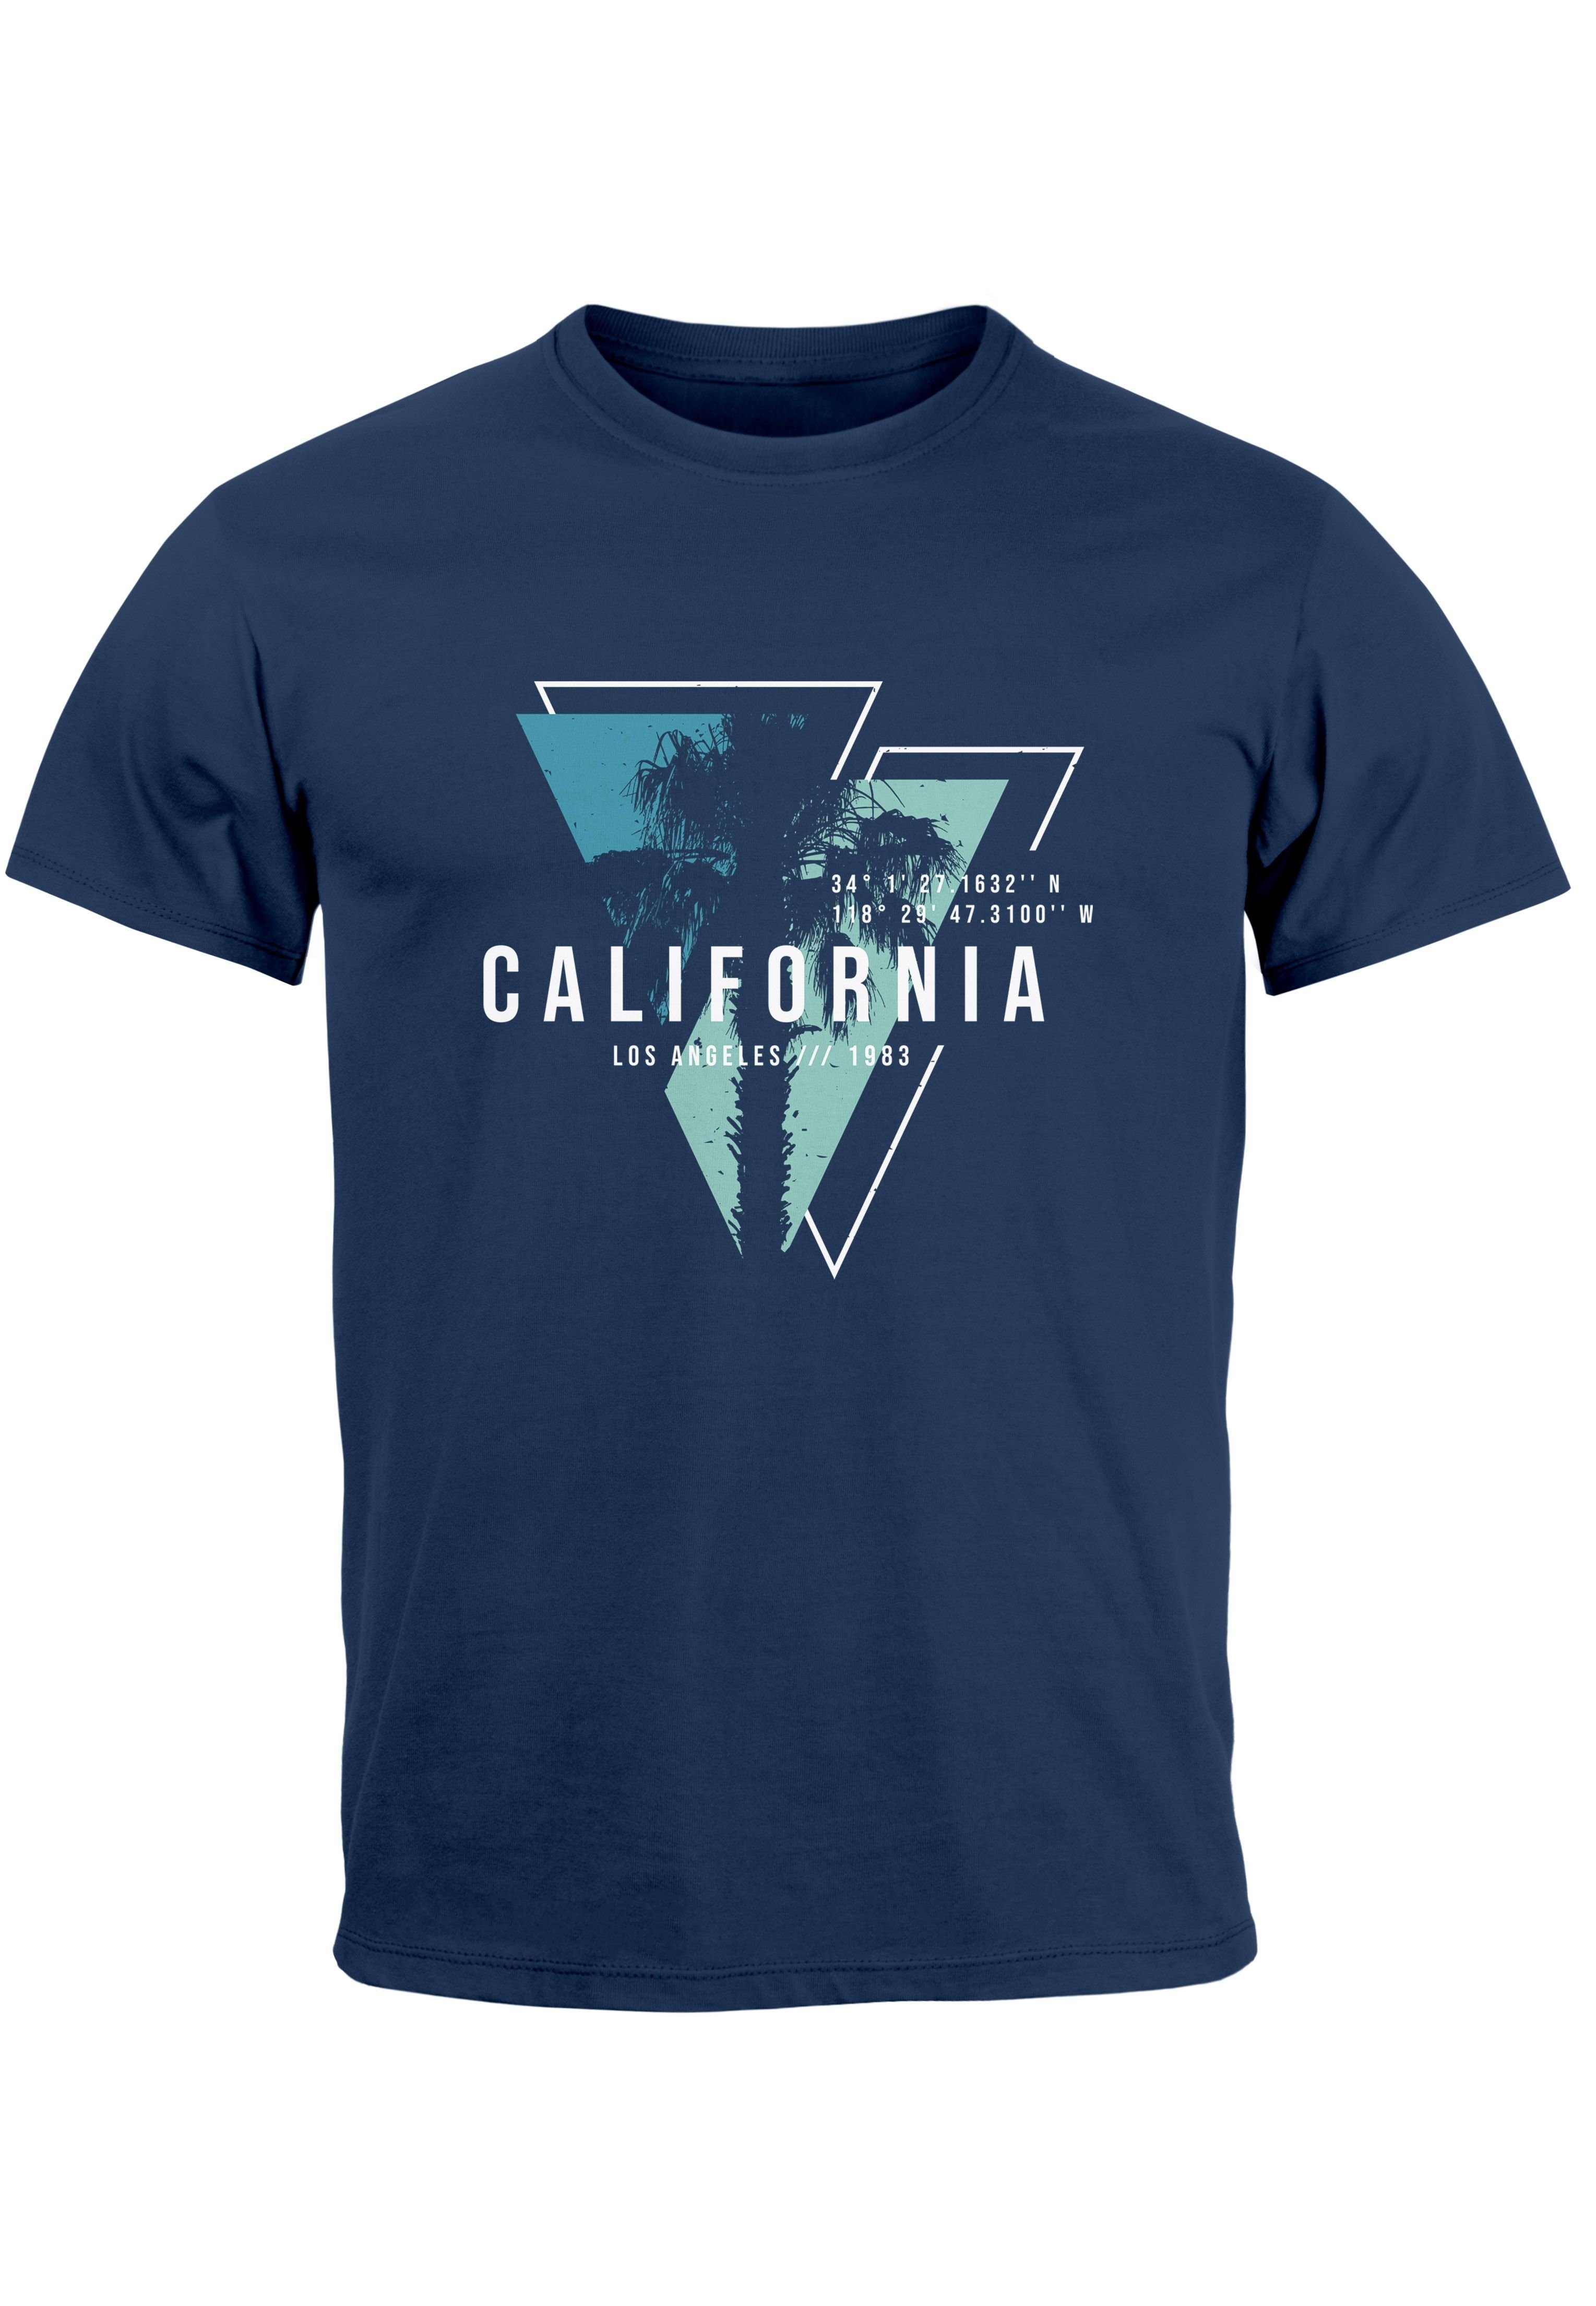 navy-blau mit California Angeles Neverless Fashion Sommer Herren T-Shirt Surfing Los Print-Shirt Print Motiv USA